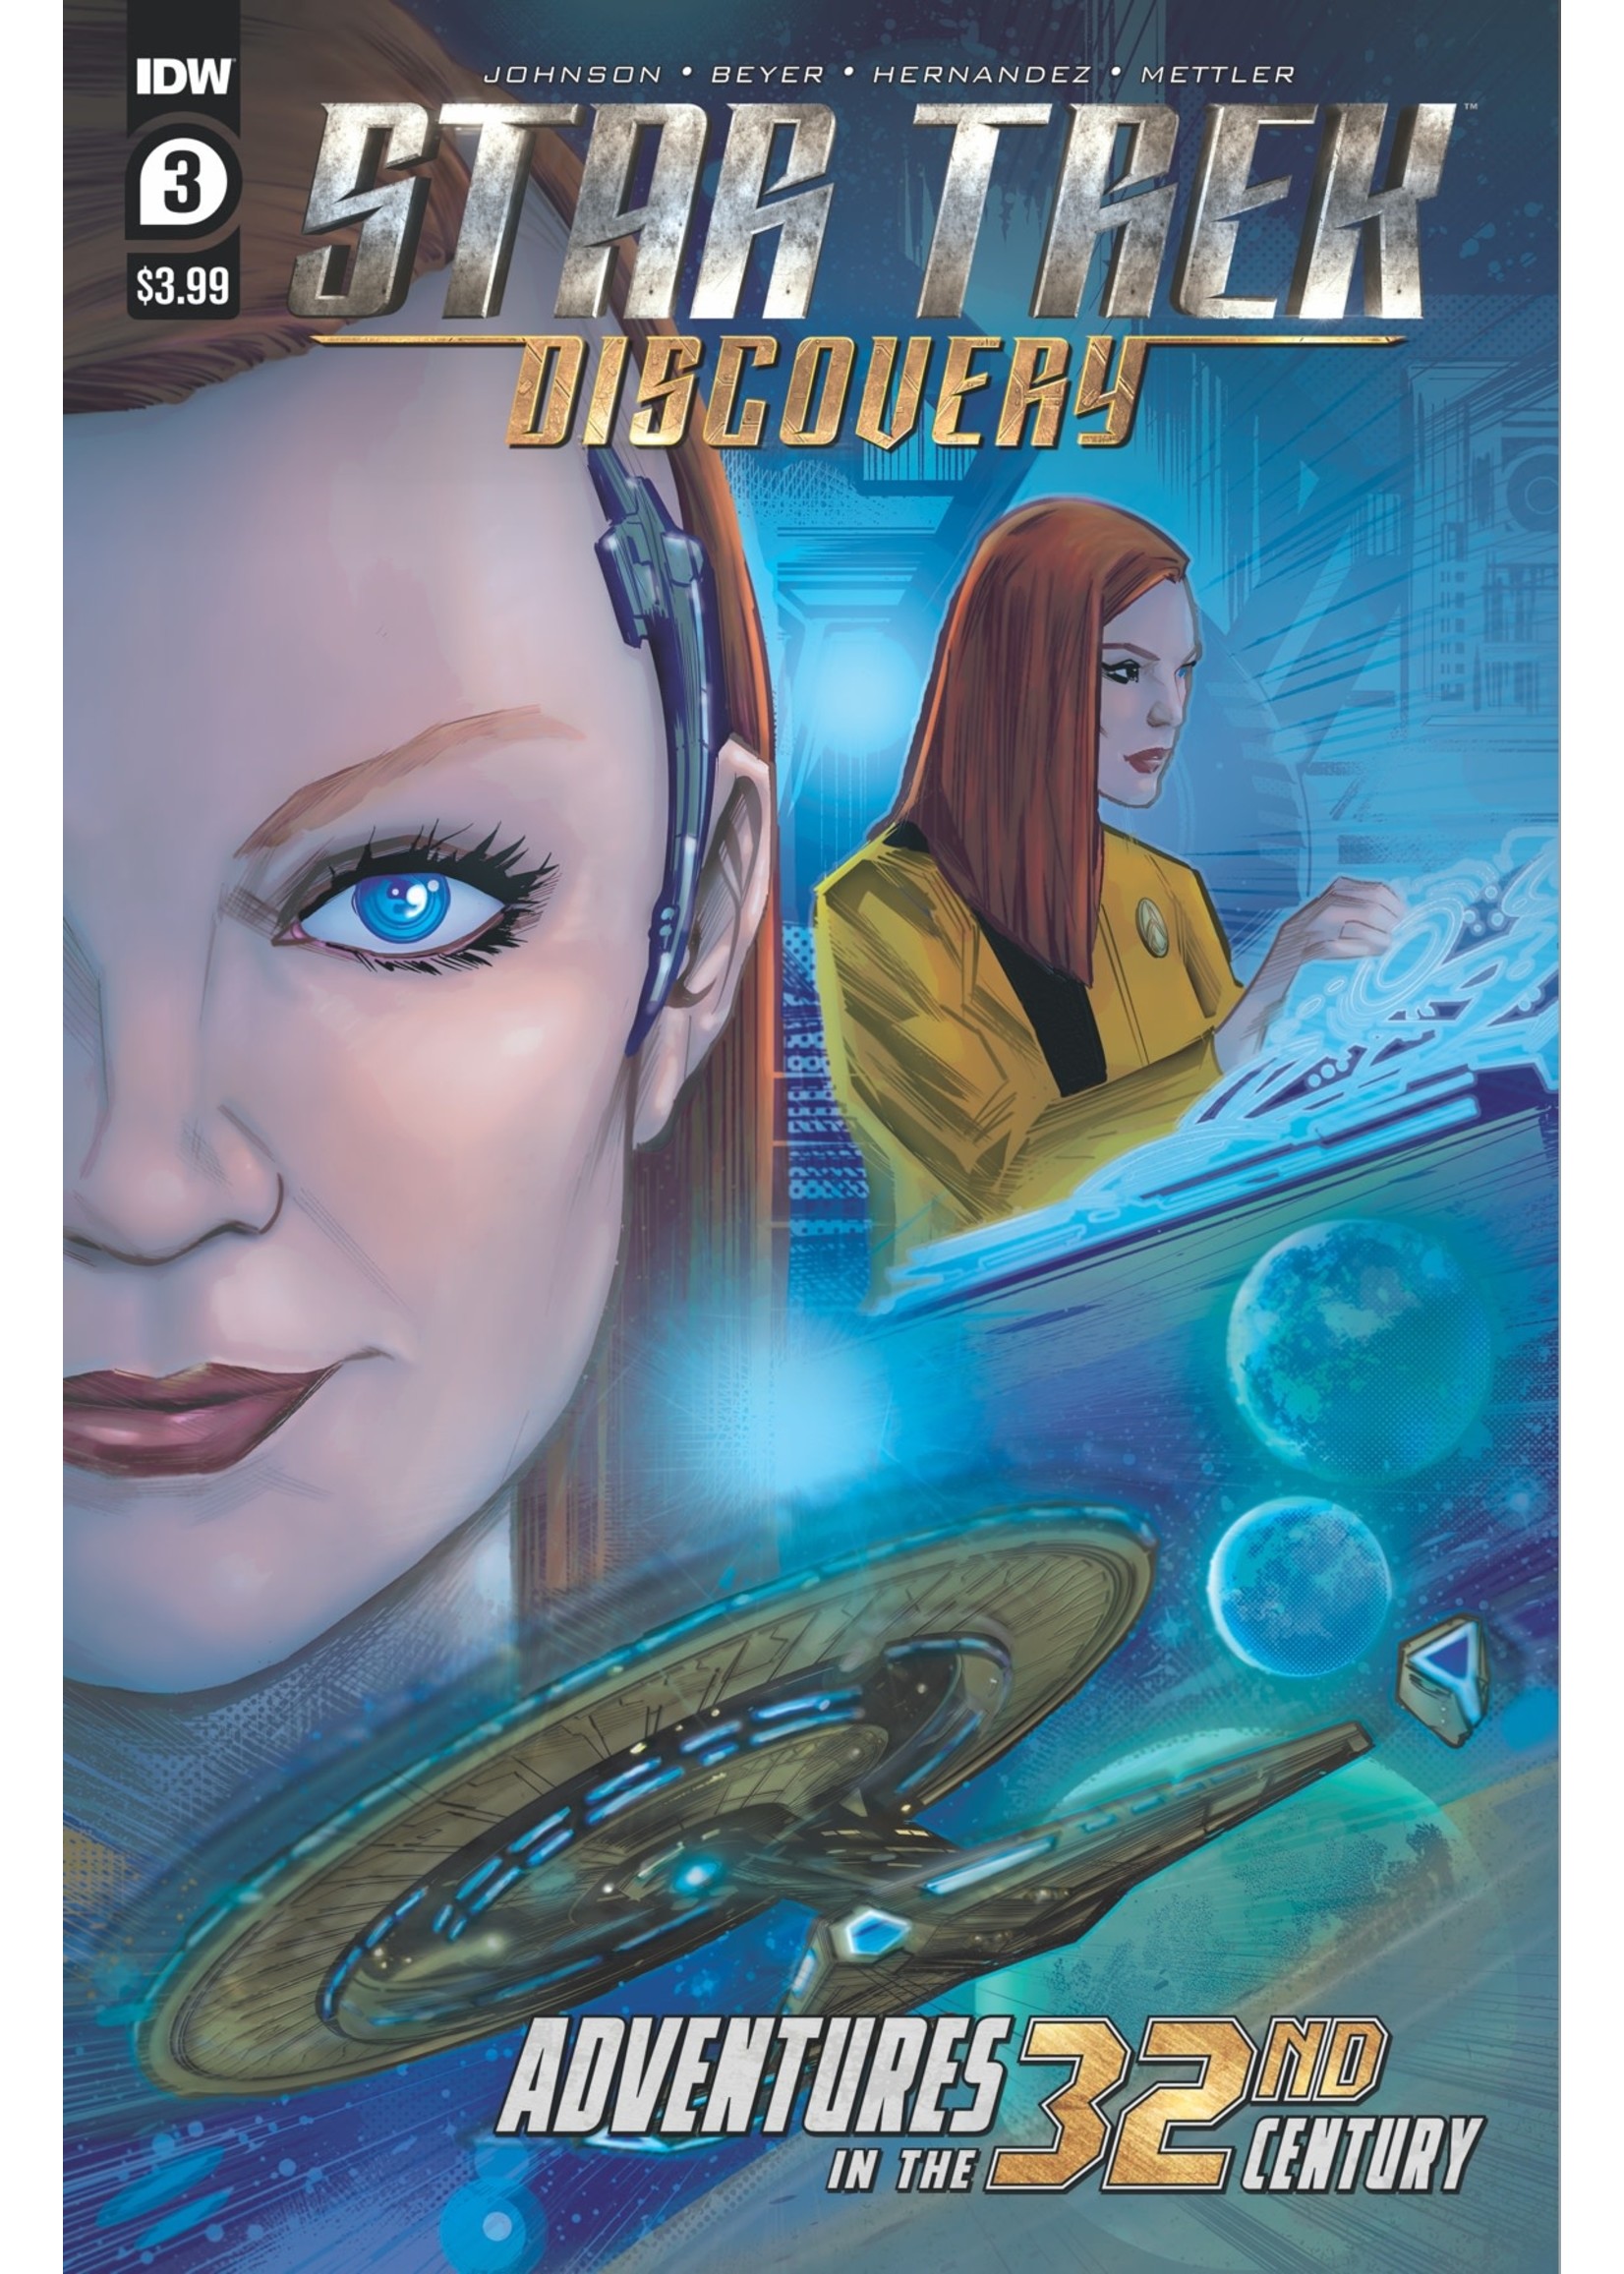 Star Trek Star Trek: Discovery - Adventures in the 32nd Century #3 (of 4)